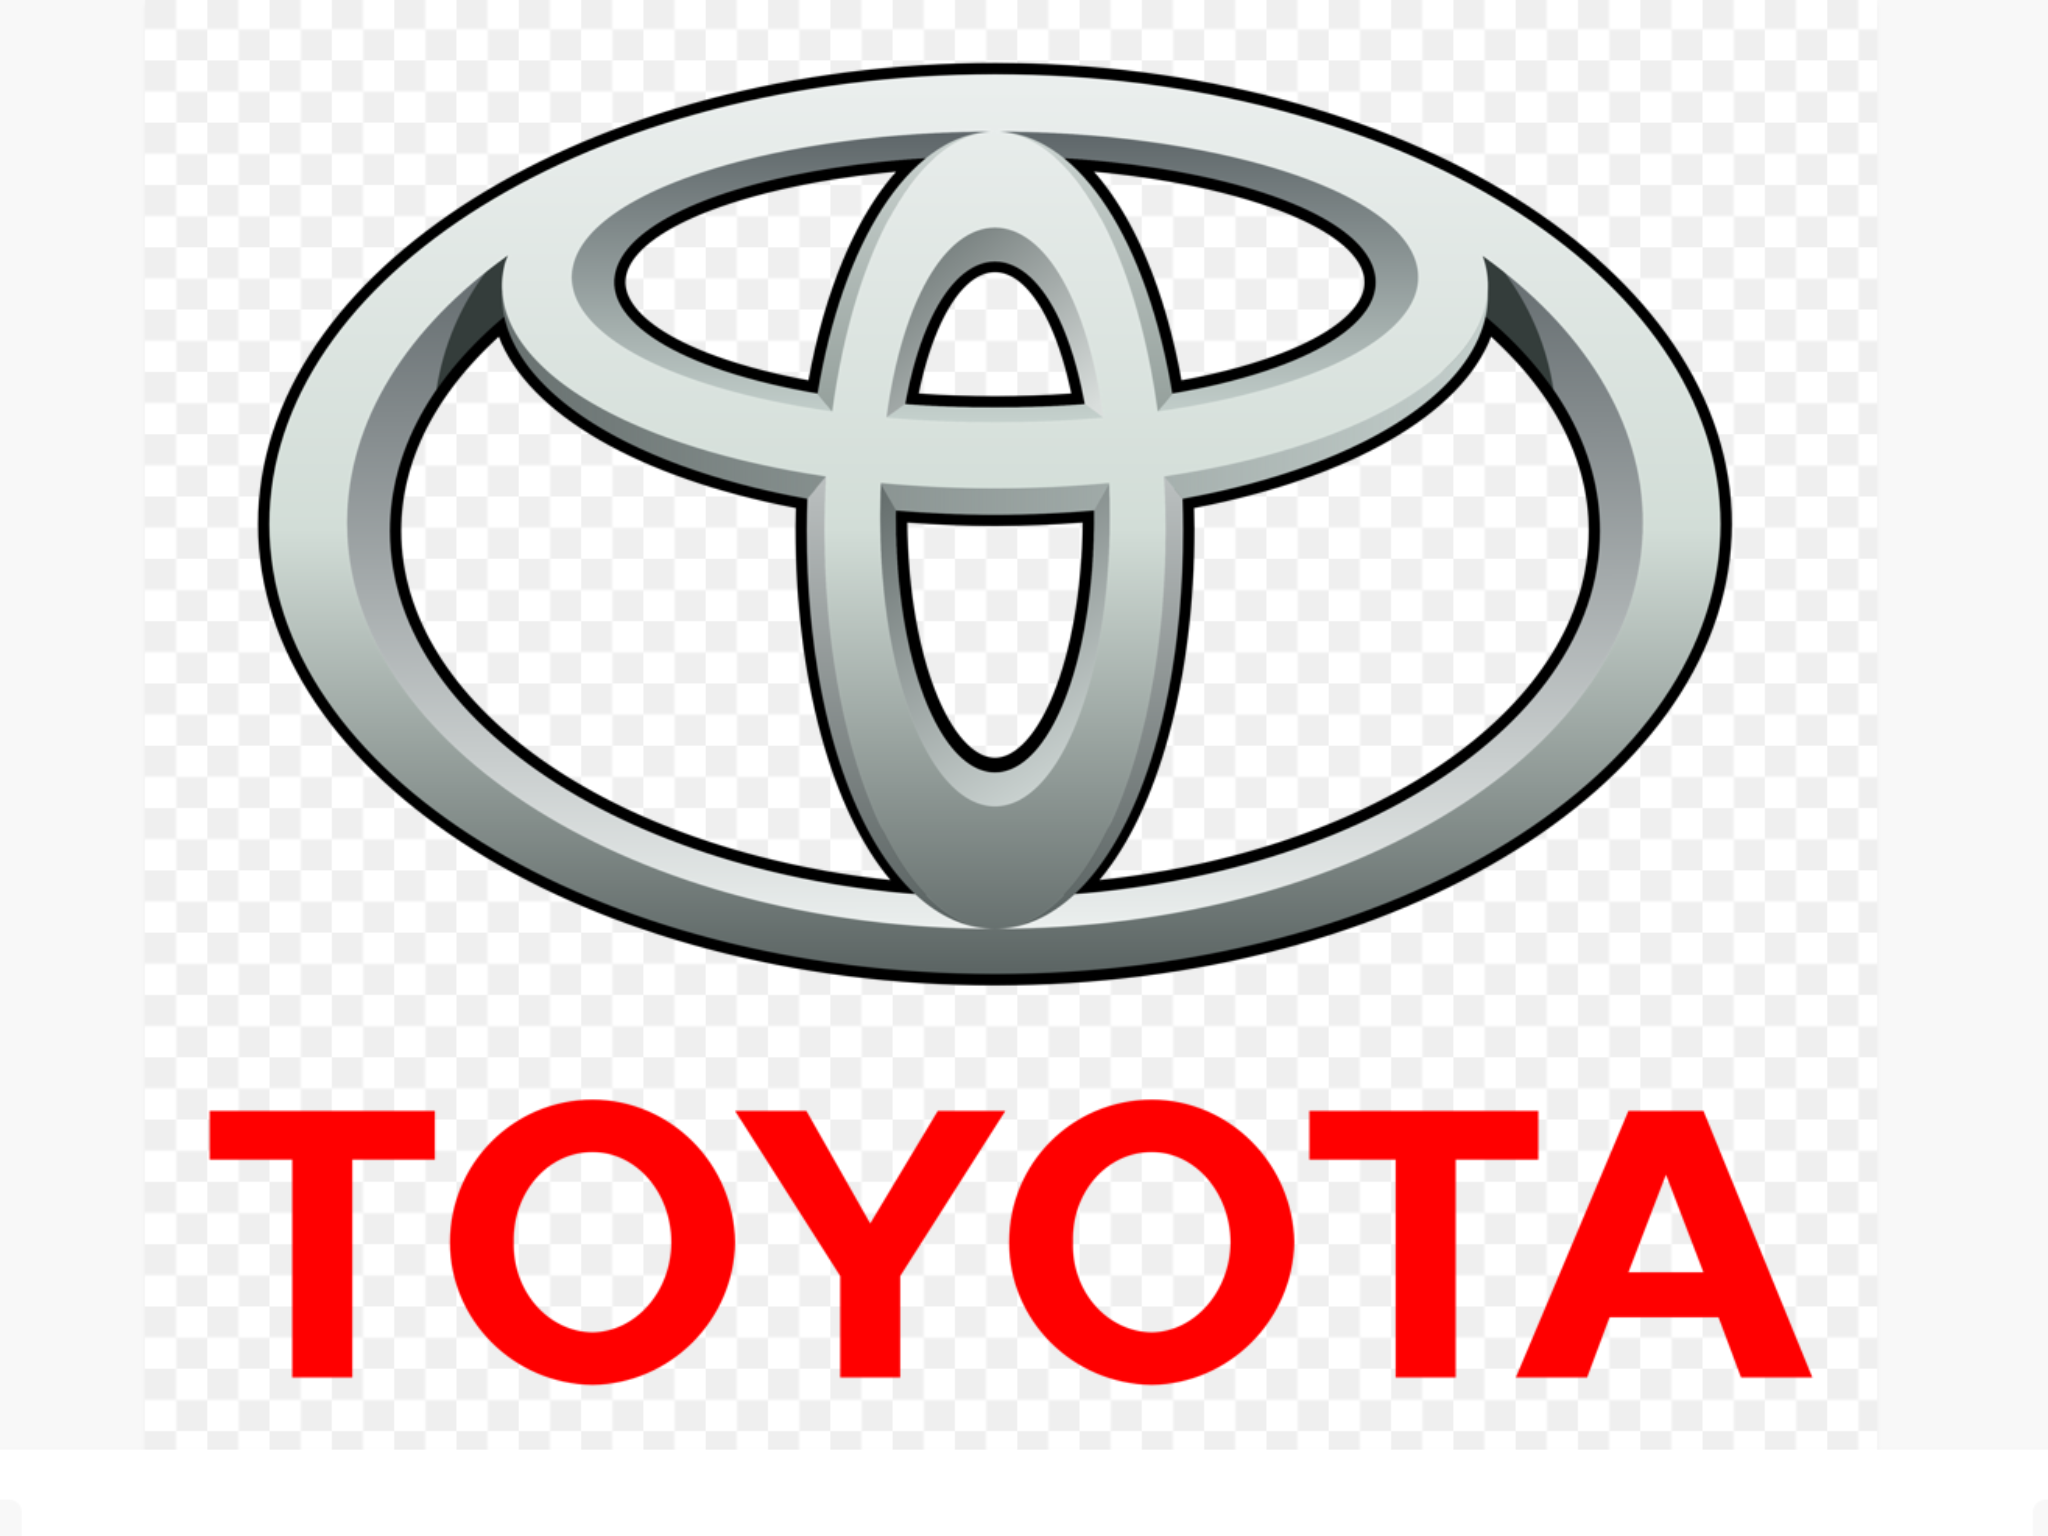 Toyota owns Lexus